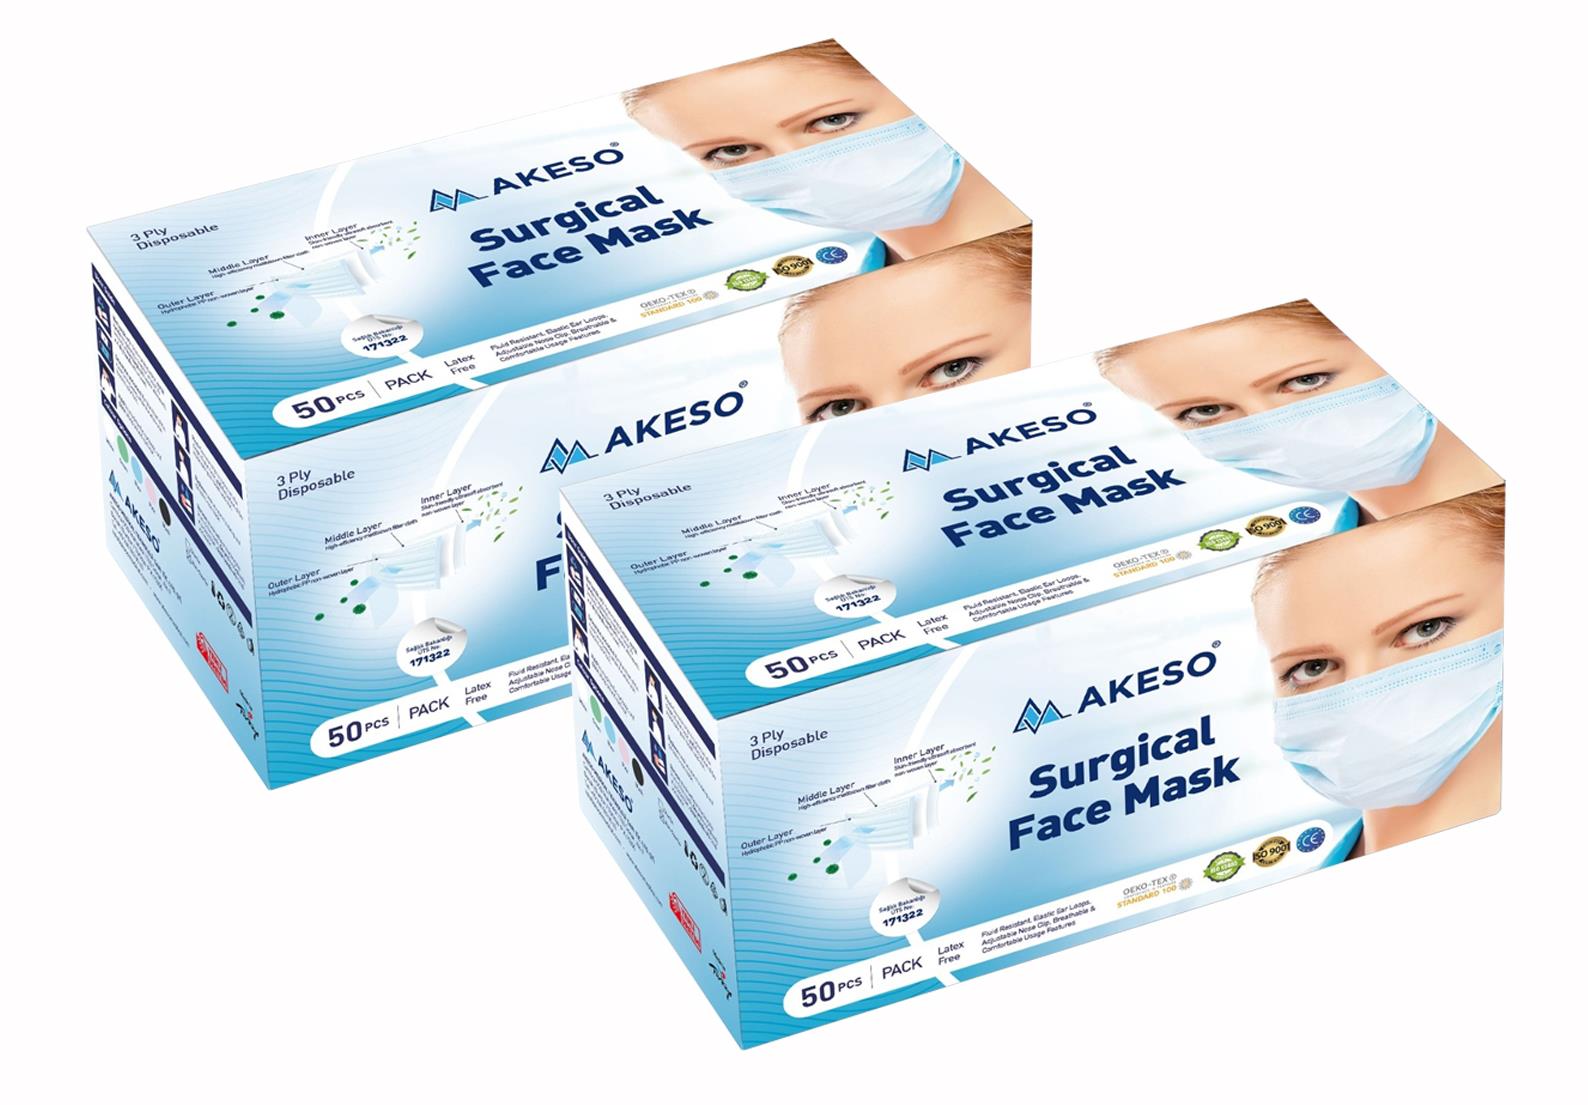 Akeso Meltblown Filtreli Cerrahi Maske 3 Katli Telli 100 Adet Fiyatlari Ve Ozellikleri